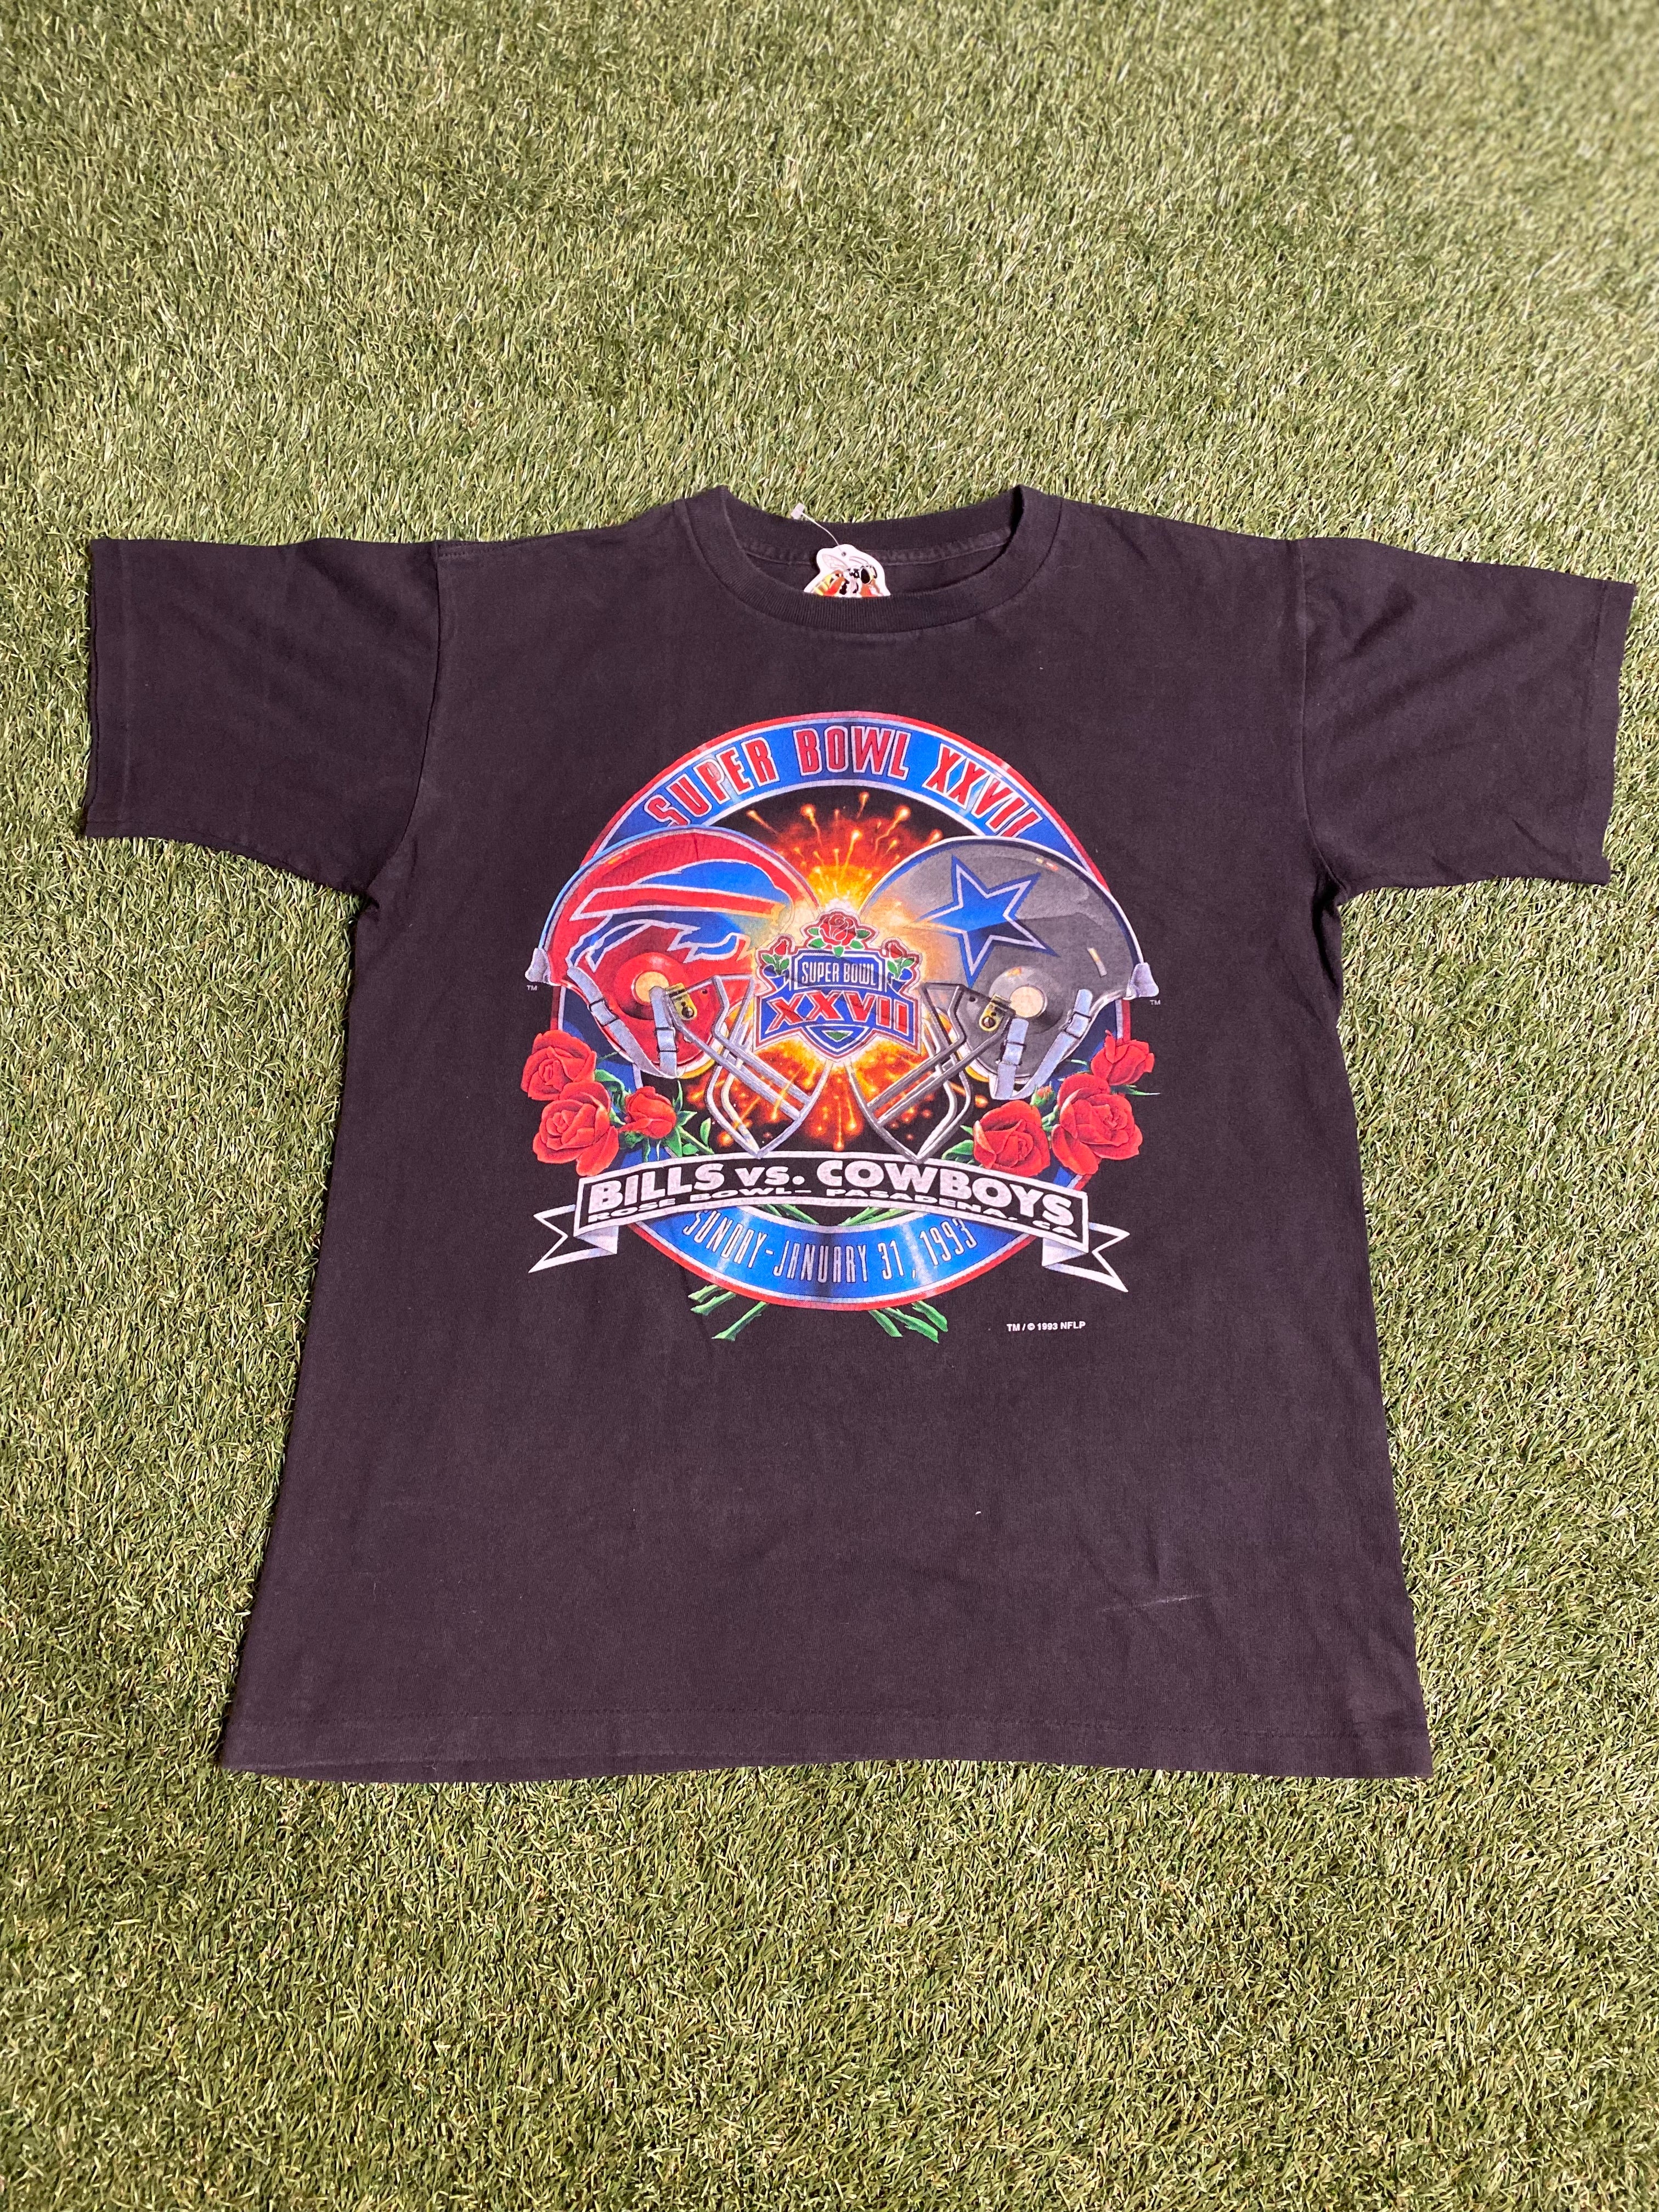 "Super Bowl XXVII" Limited Edition Vintage T-Shirt